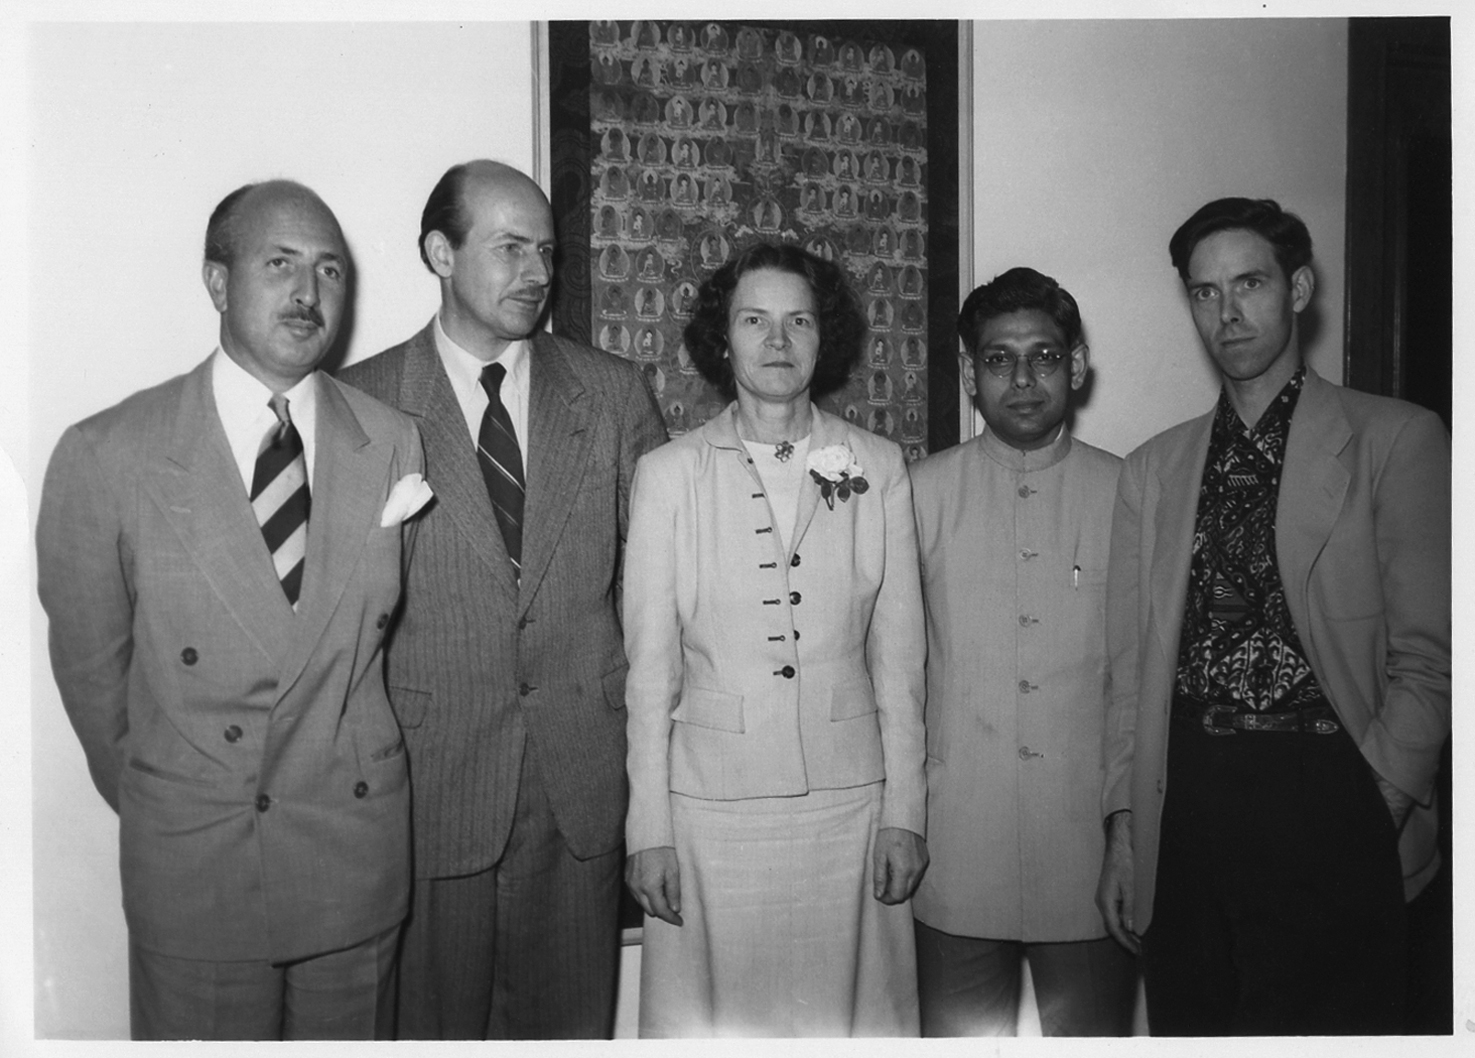 Group photo of Louis P. Gainsboroug, Frederic Spiegelberg, Judith Tyberg, Haridas Chaudhuri, and Alan Watts. Circa 1951